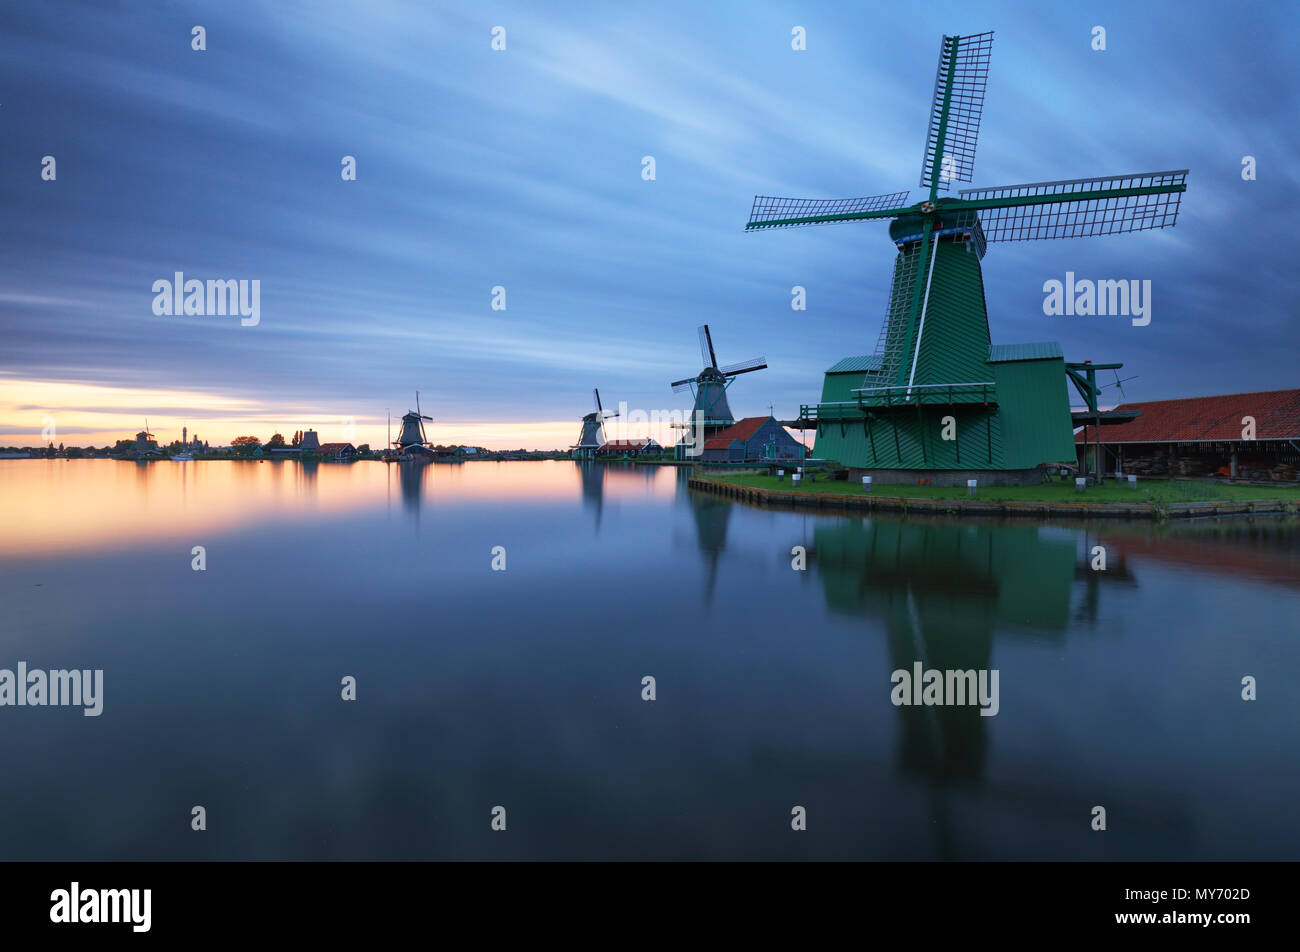 Landscape of Netherlands windmills at night Stock Photo